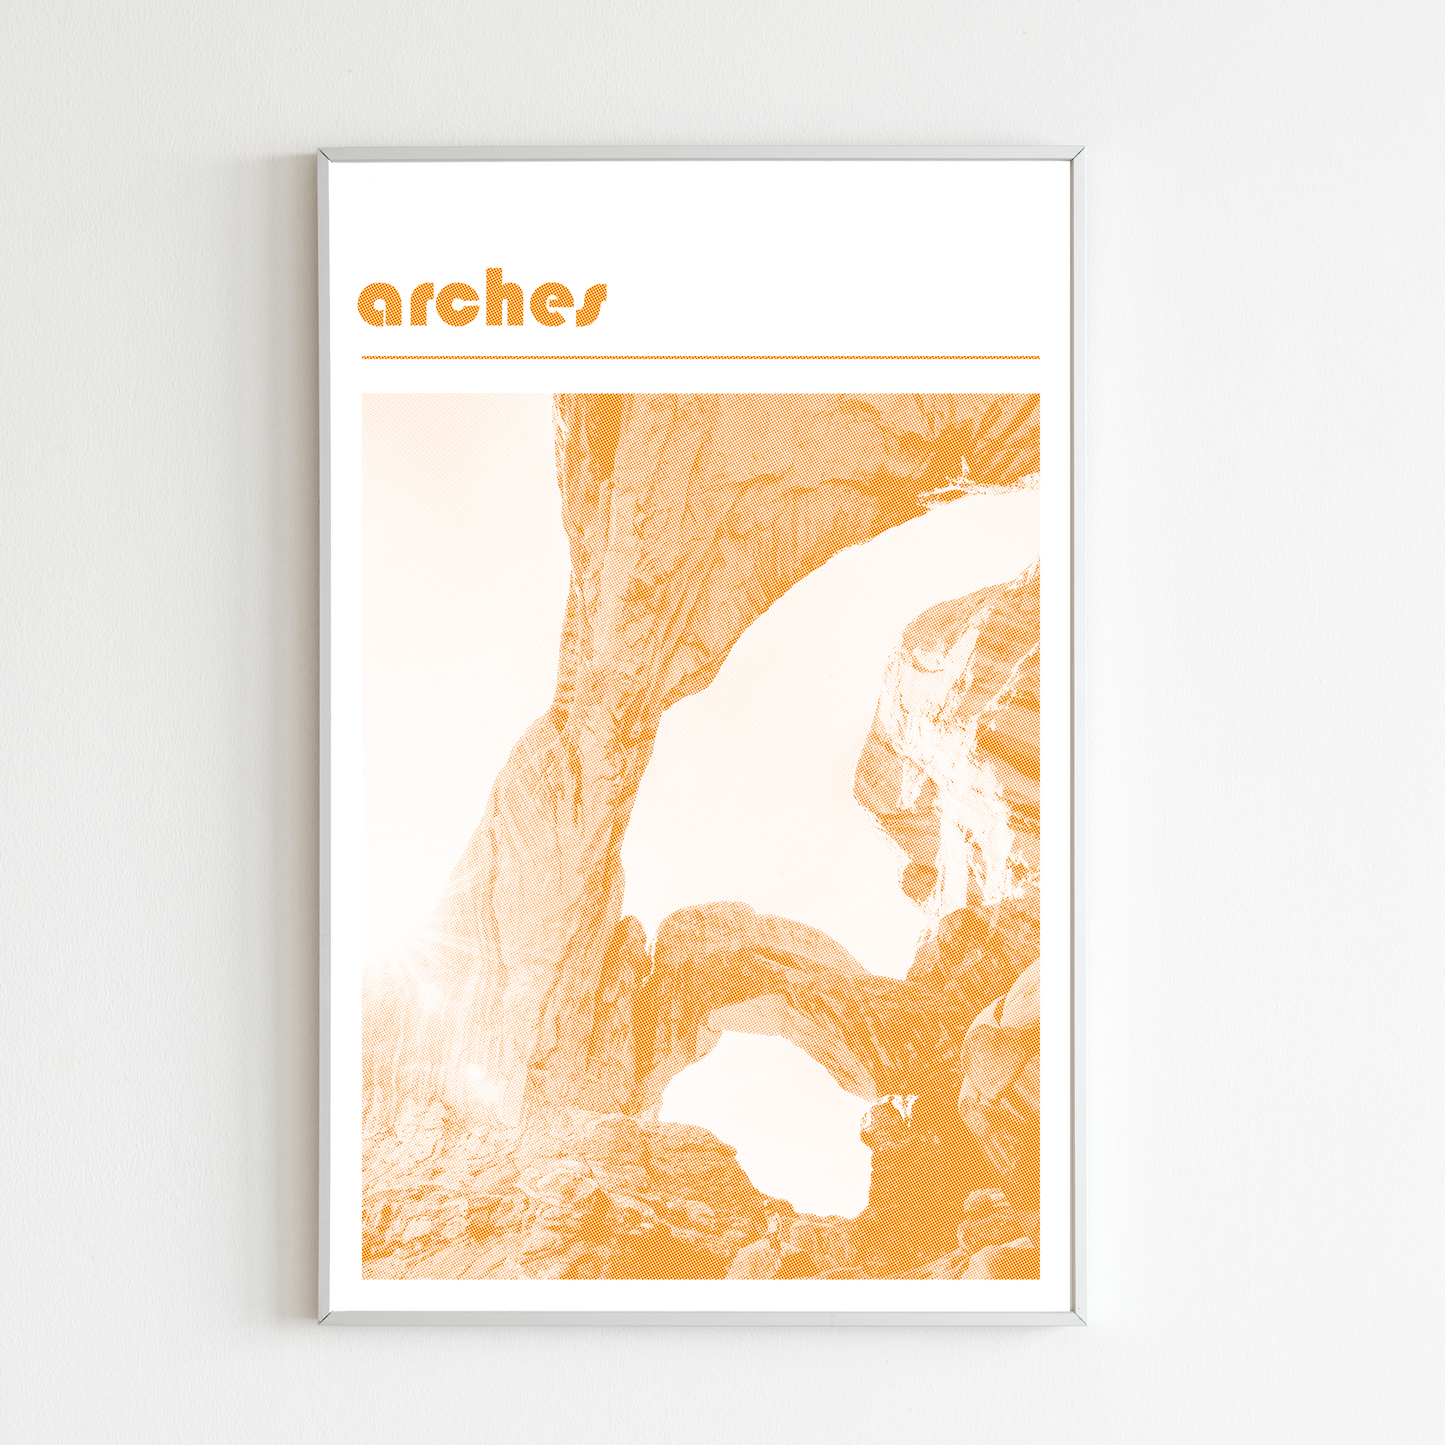 Arches National Park Poster - Orange